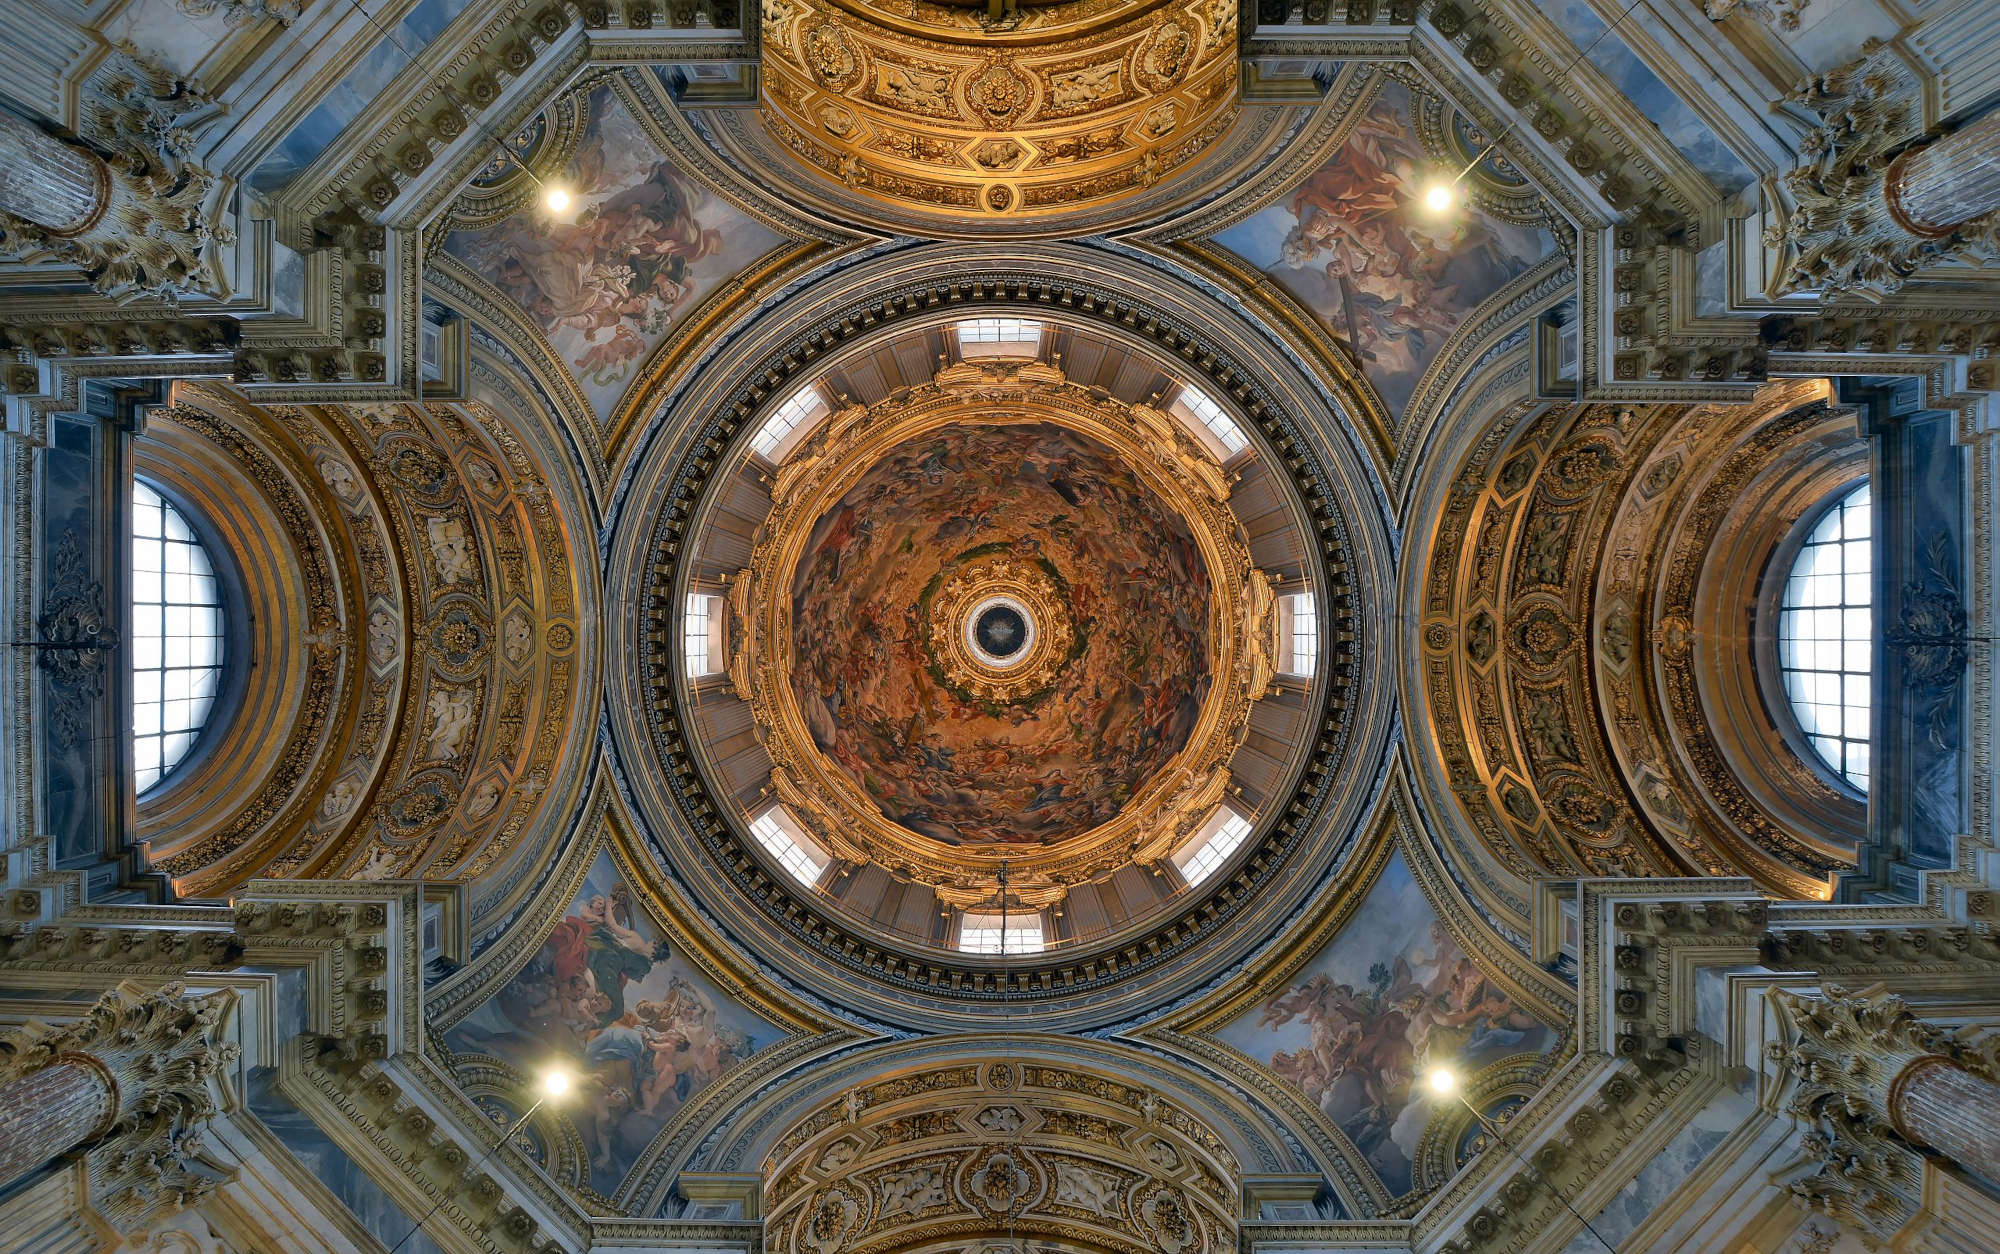 Le dôme vu de dessous. Photo : Wikimedia/LivioAndronico